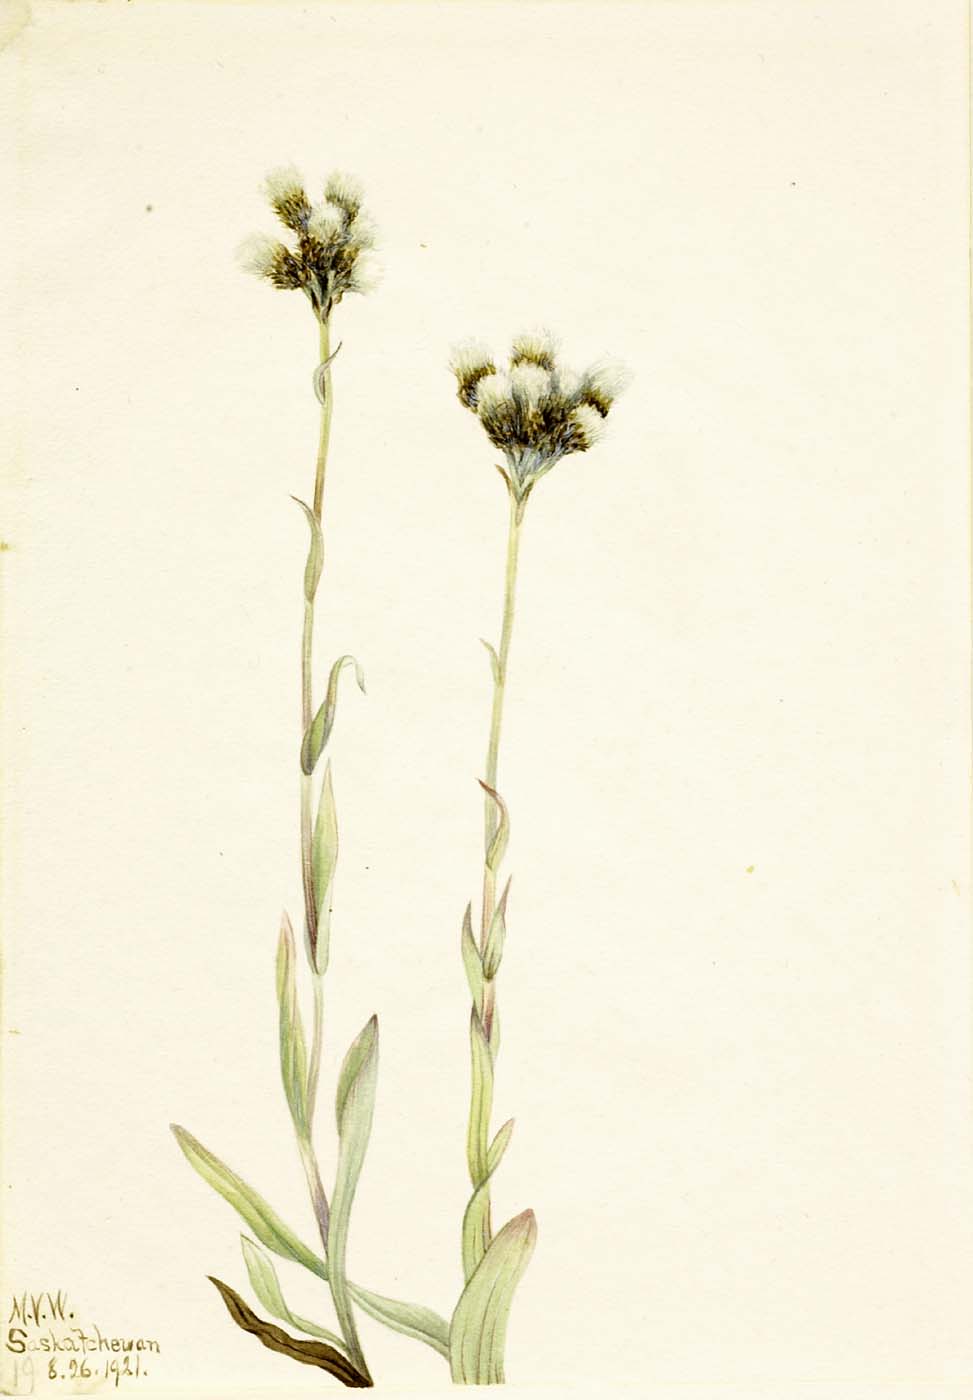 Gray Pussytoes botanical illustration by Mary Vaux Walcott circa 1921.